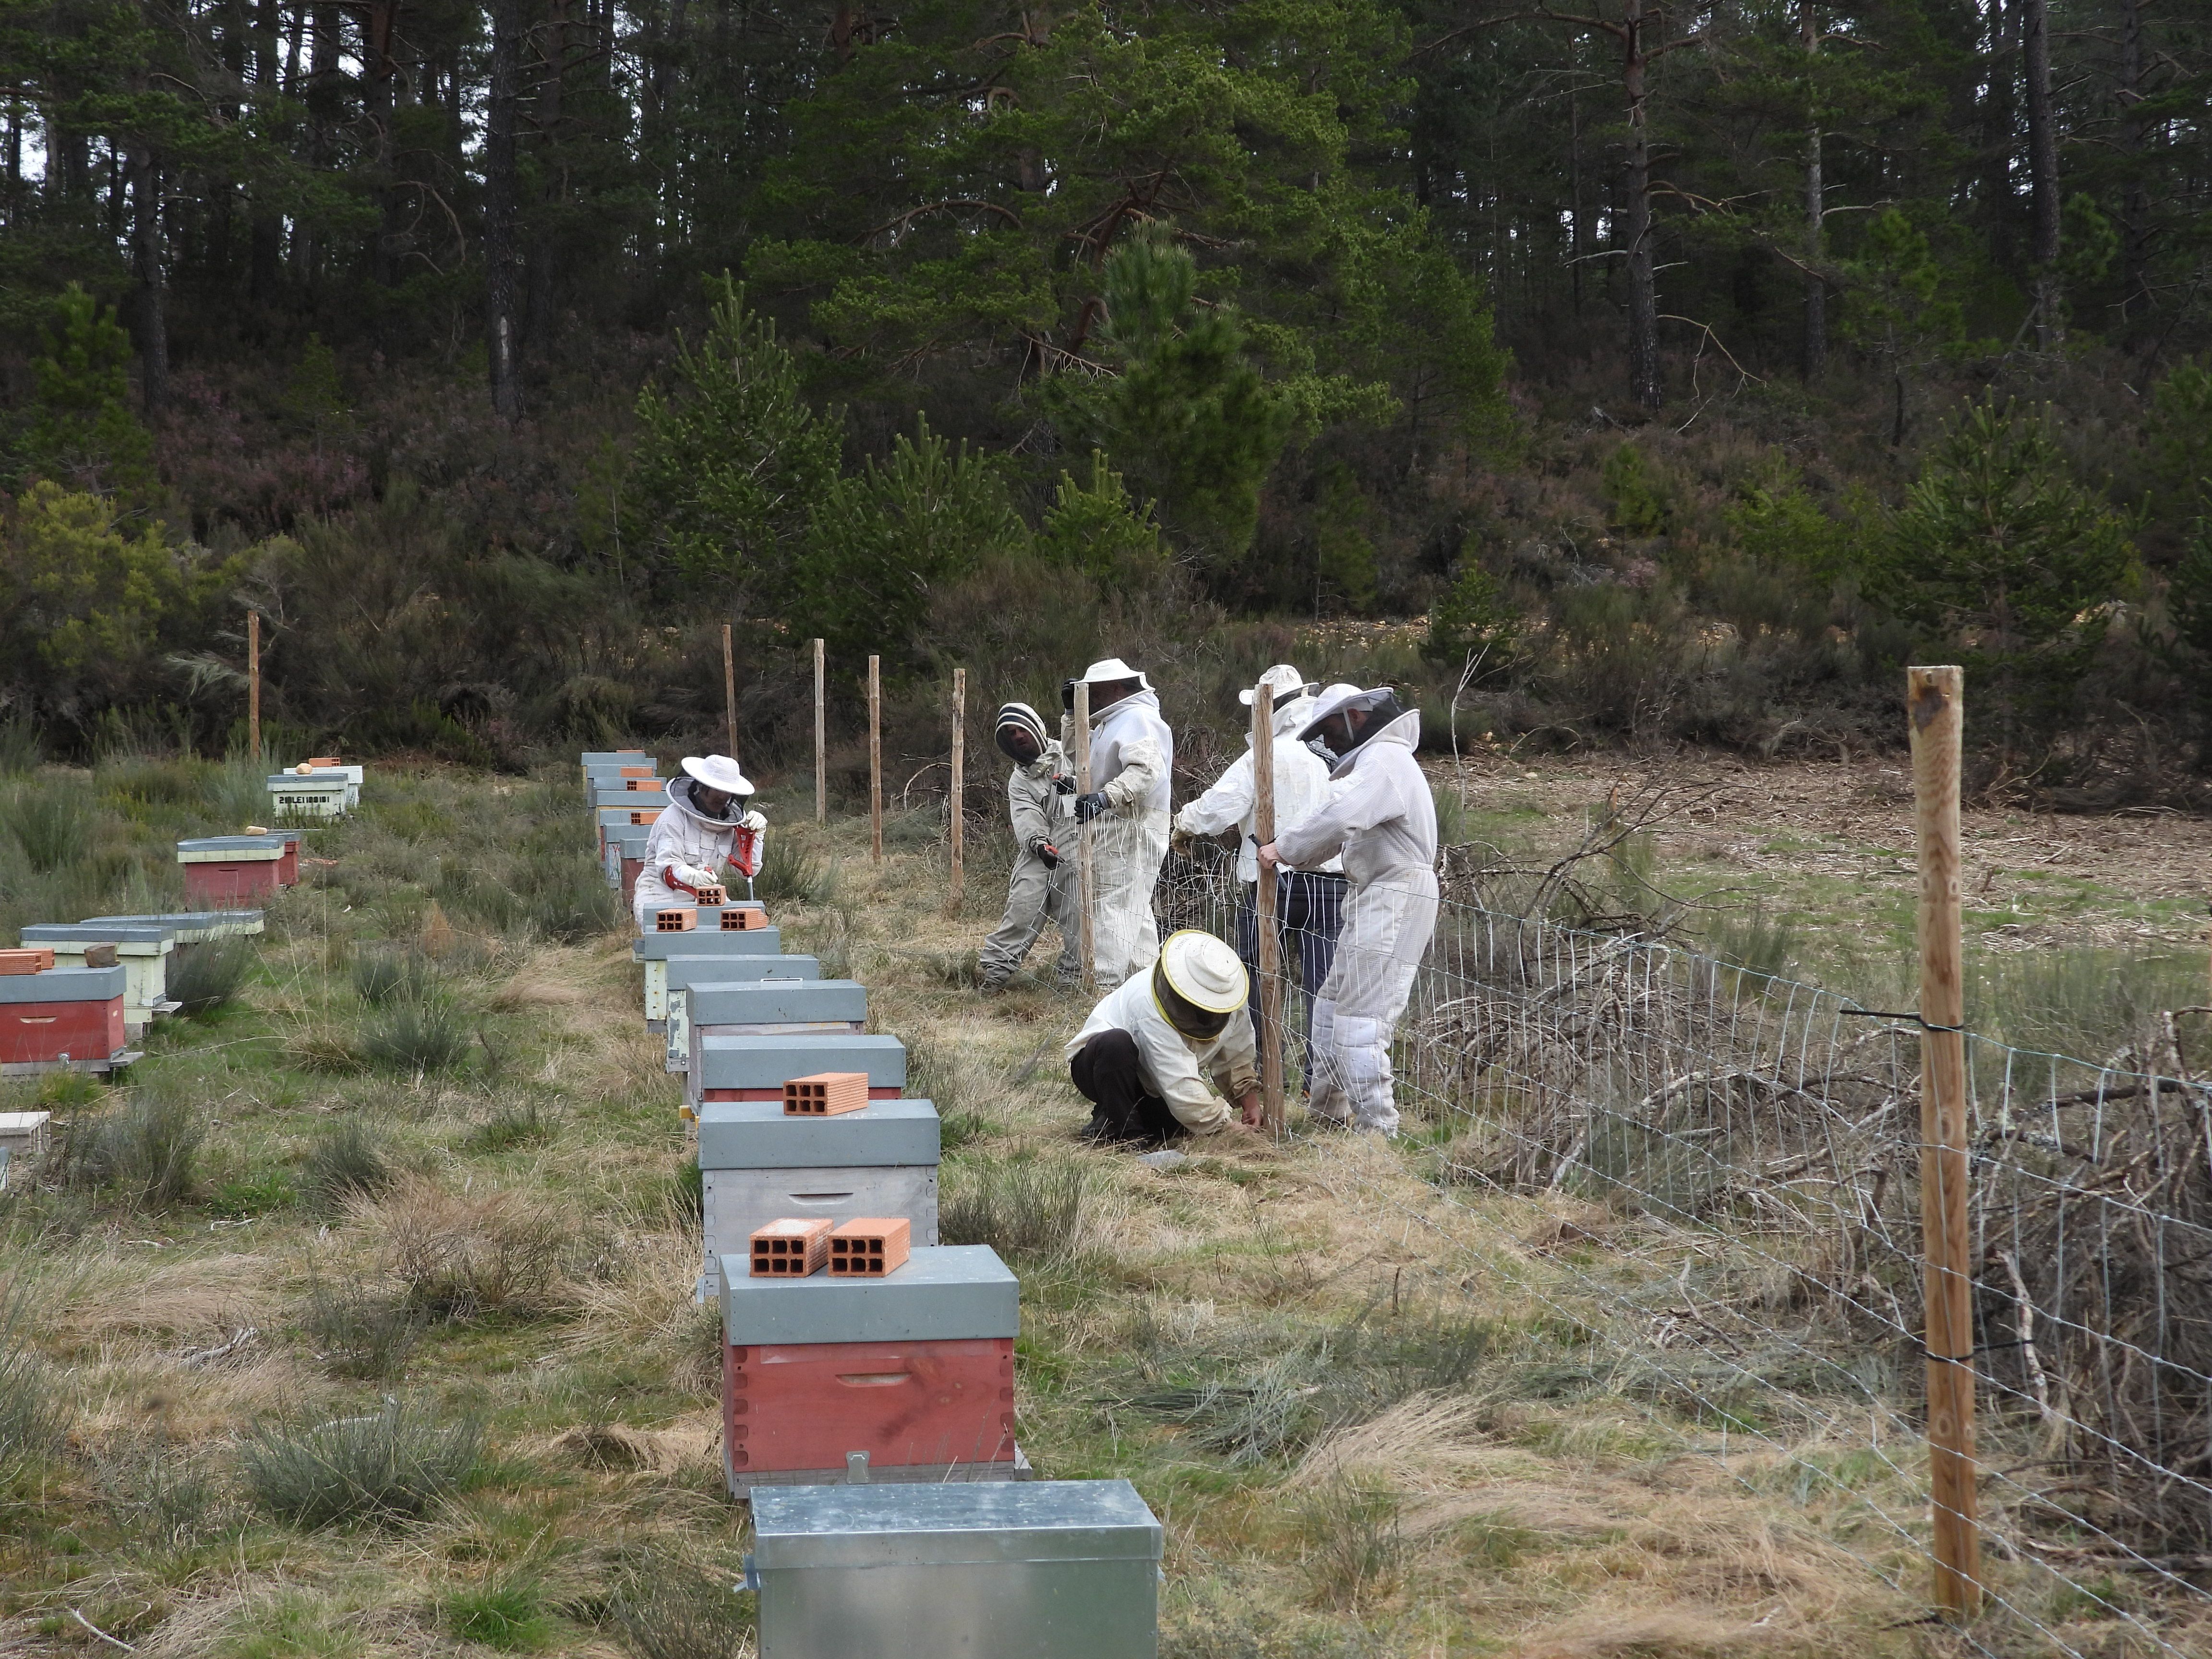 Los apicultores aprendieron a proteger sus colmenas de ataques. | L.N.C.